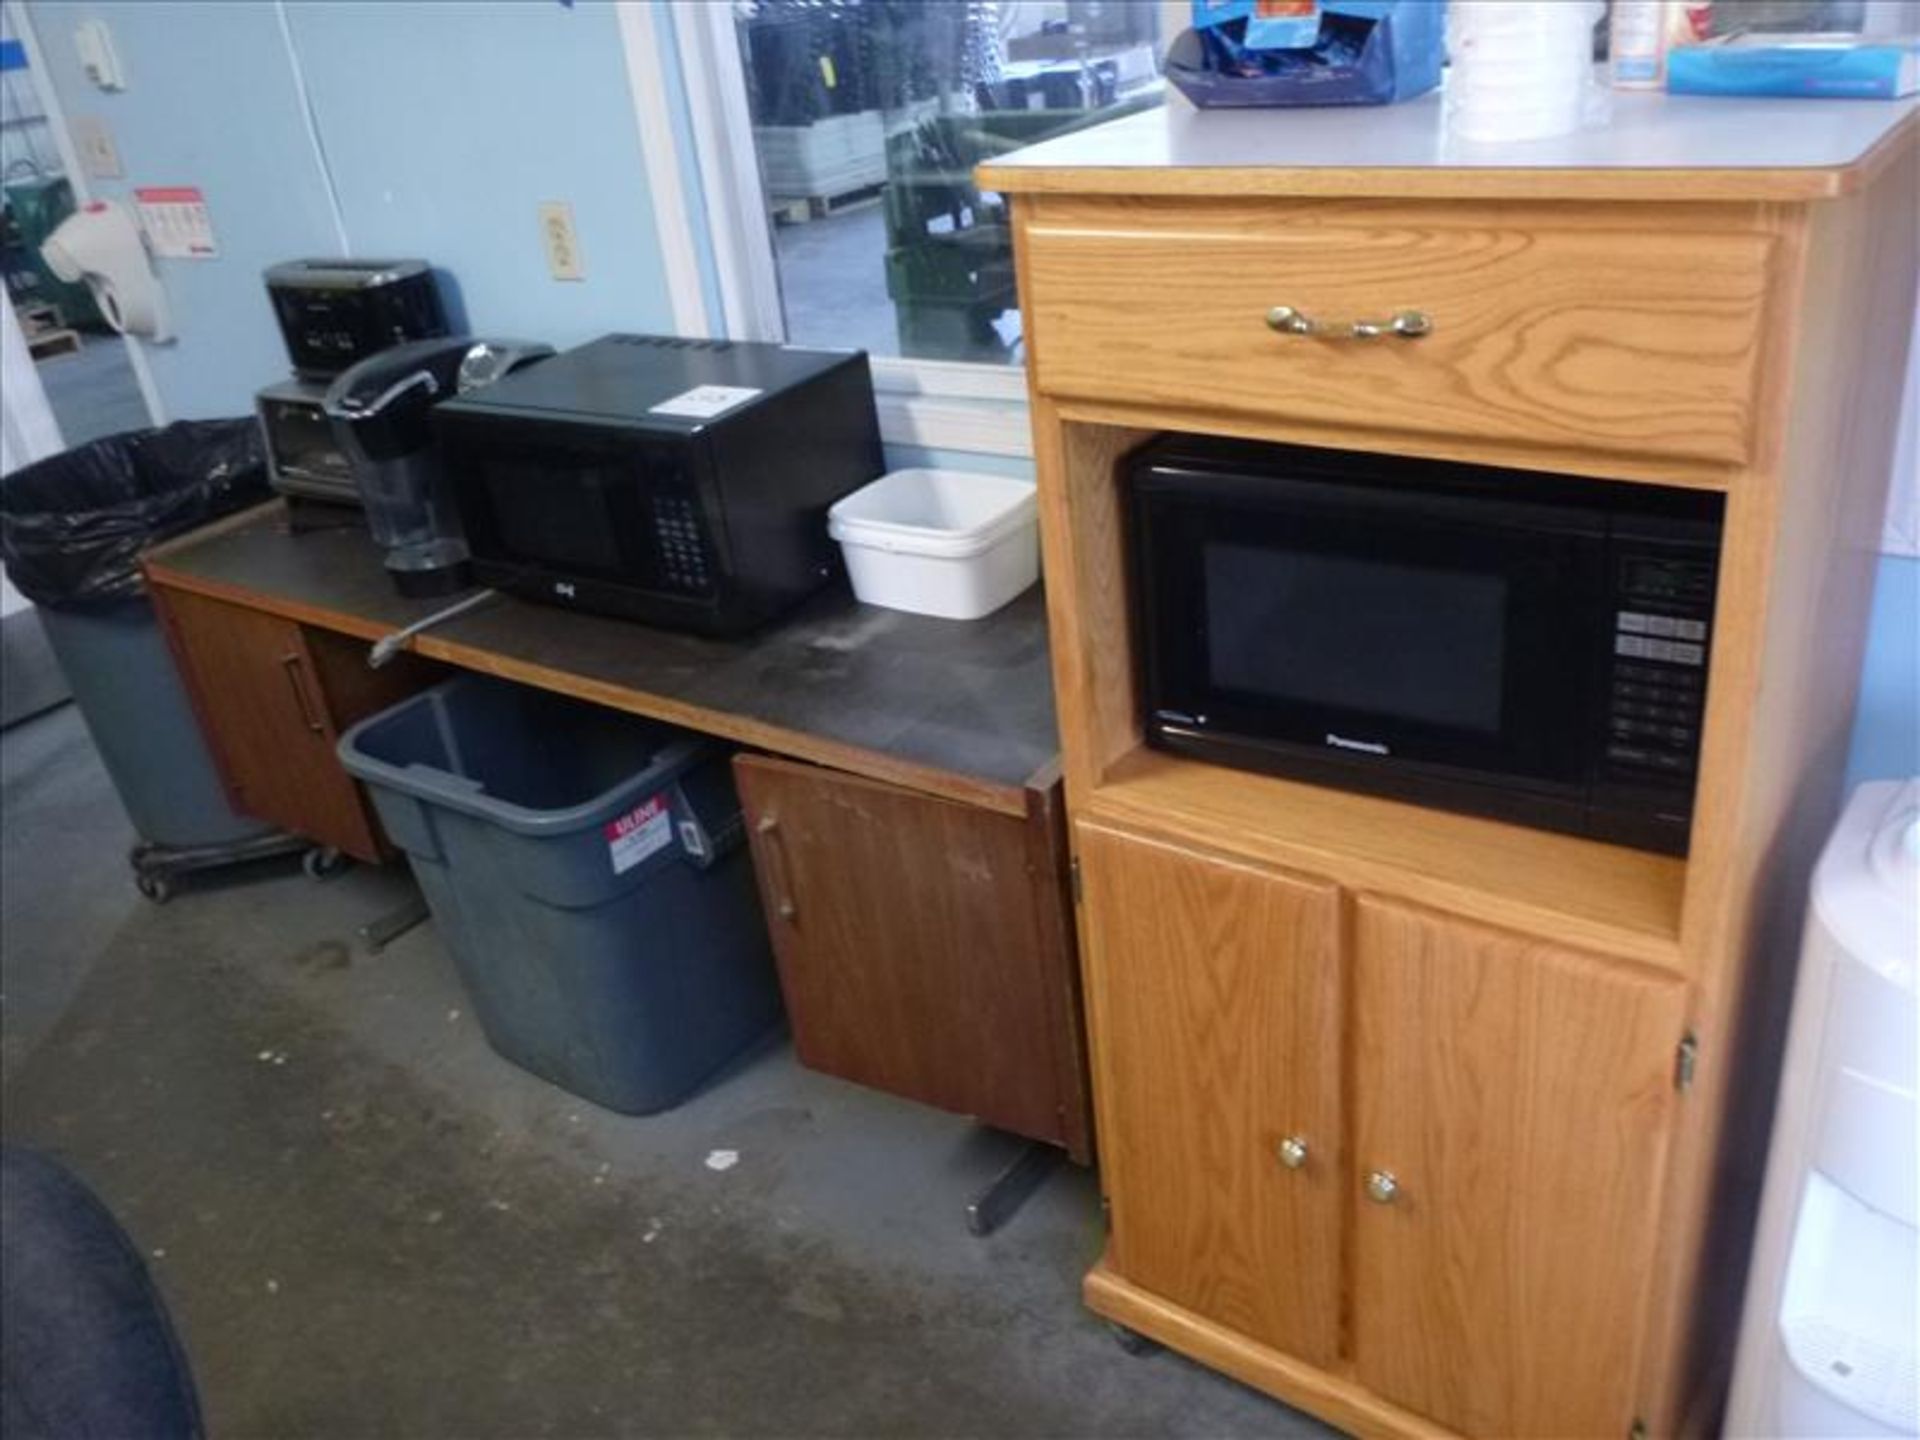 (2) microwave ovens & cabinet, (2) toasters (excluding Keurig coffee maker) [SP]